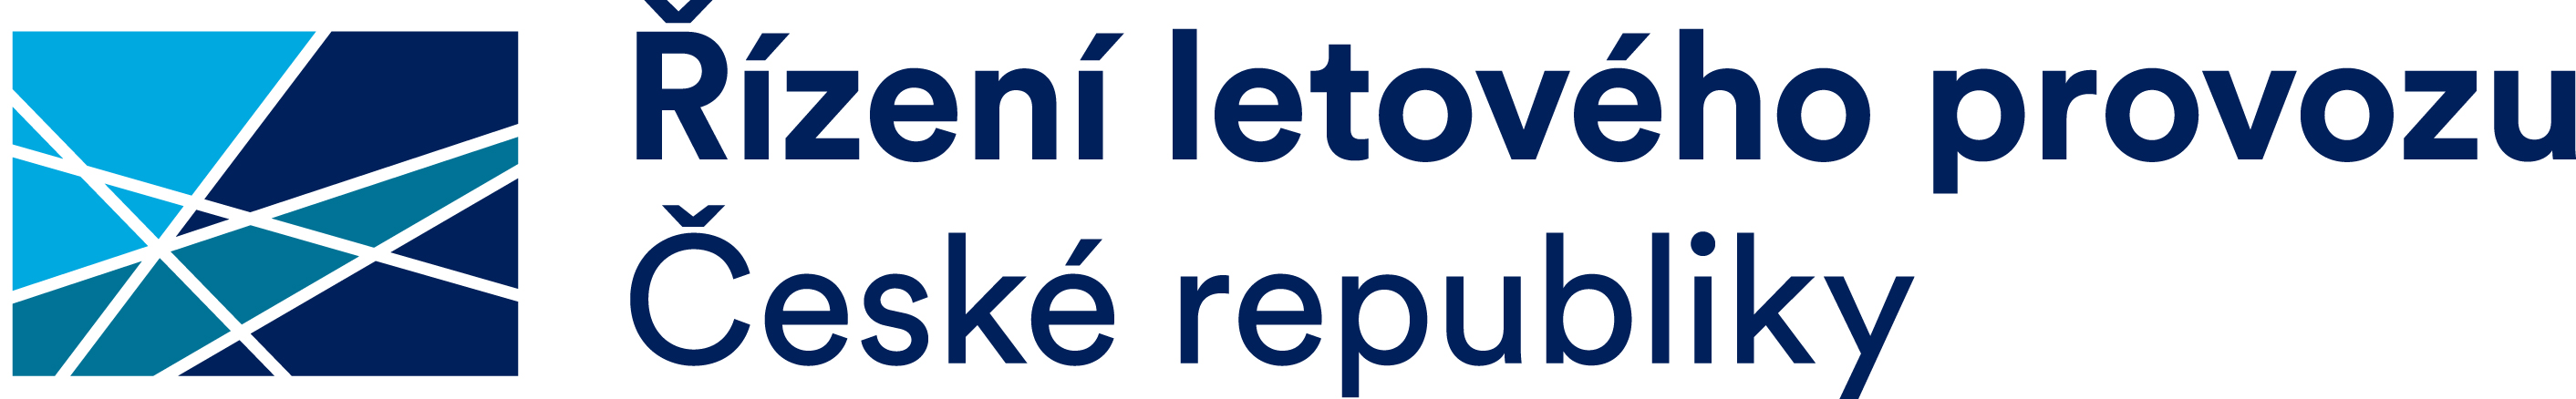 RLP-logo-CZ